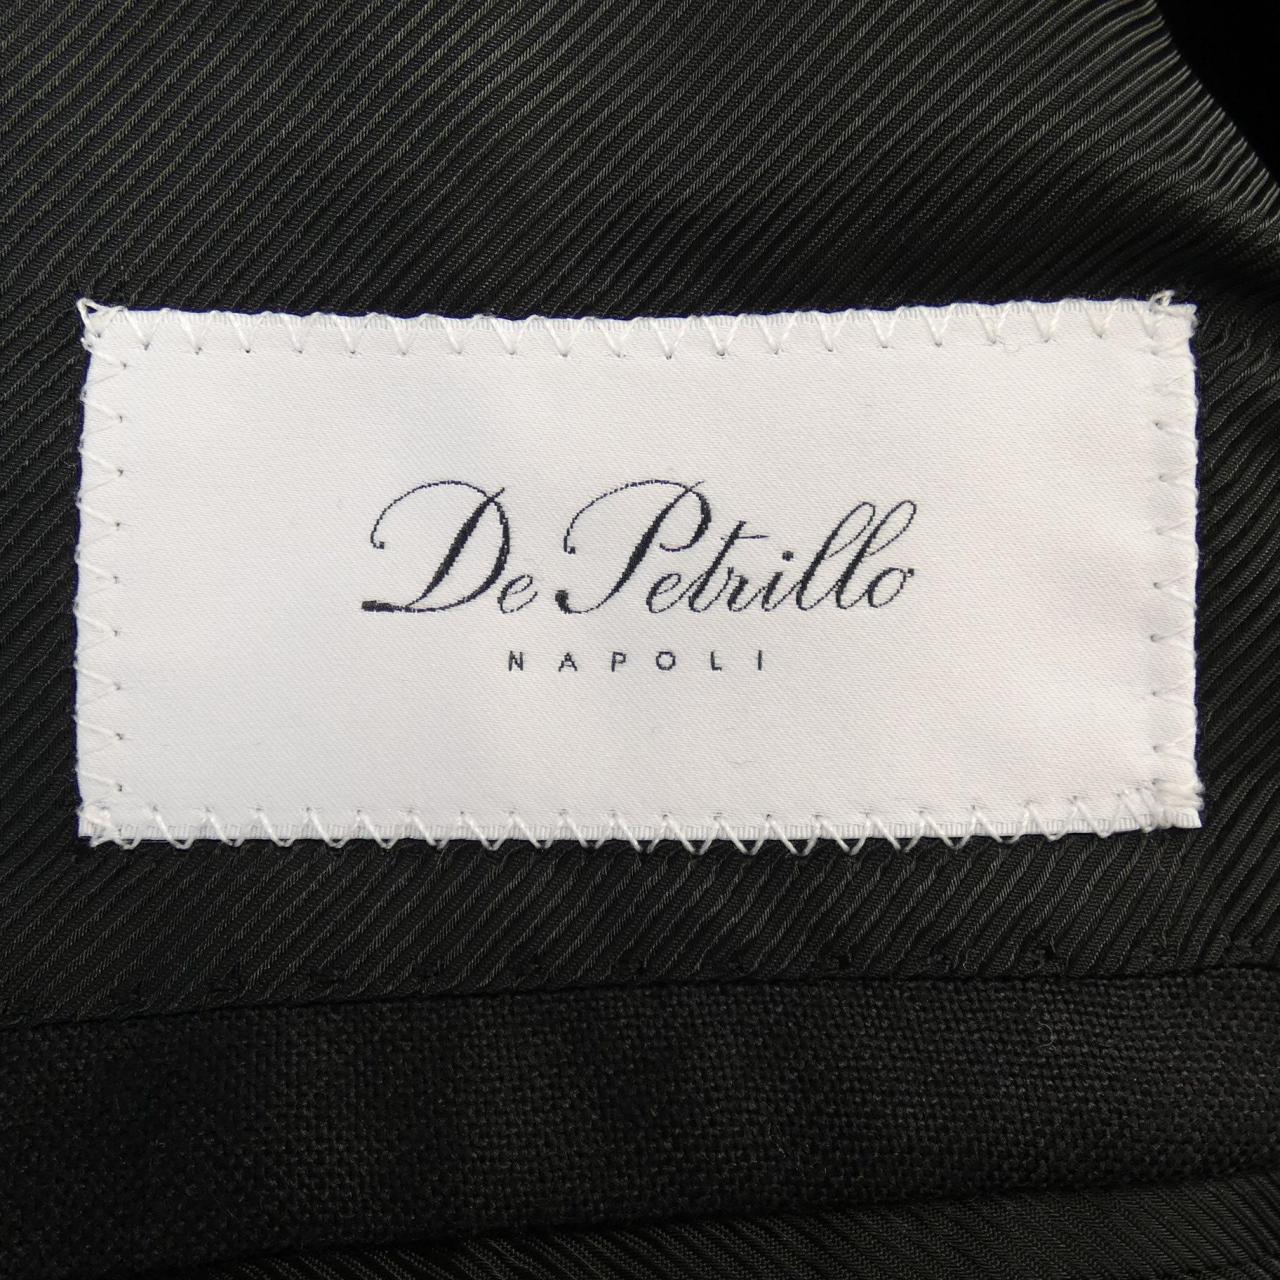 DE PETRILLO jacket